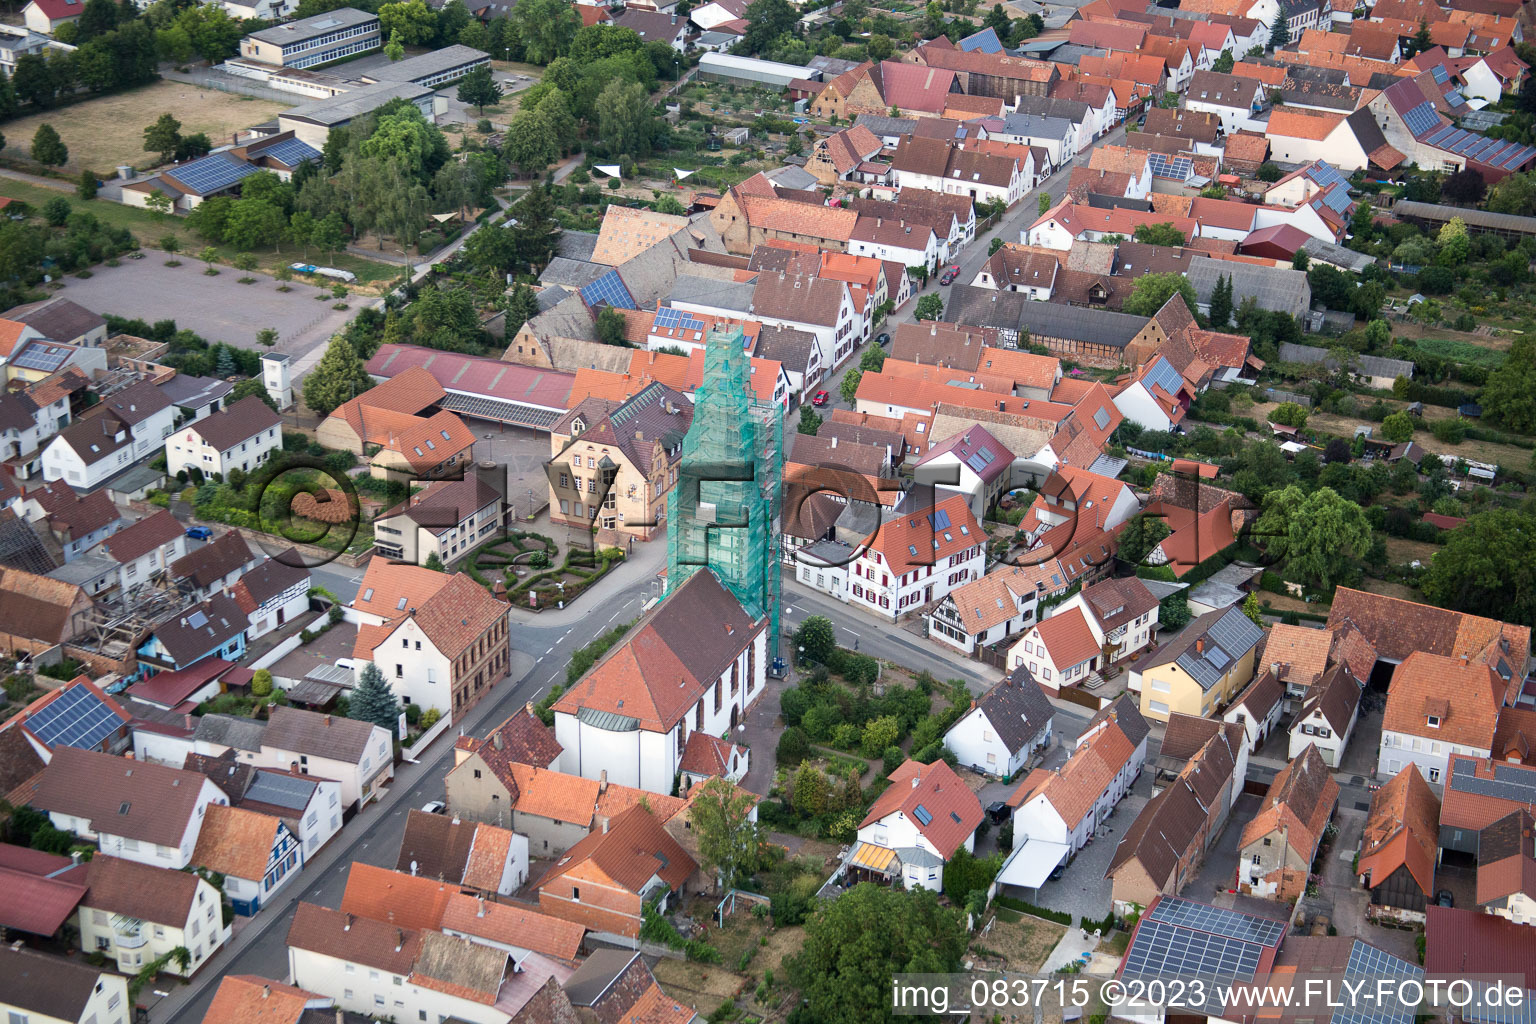 Aerial view of Ottersheim, Catholic church scaffolded by Leidner GmbH Gerüstbau, Landau in Ottersheim bei Landau in the state Rhineland-Palatinate, Germany